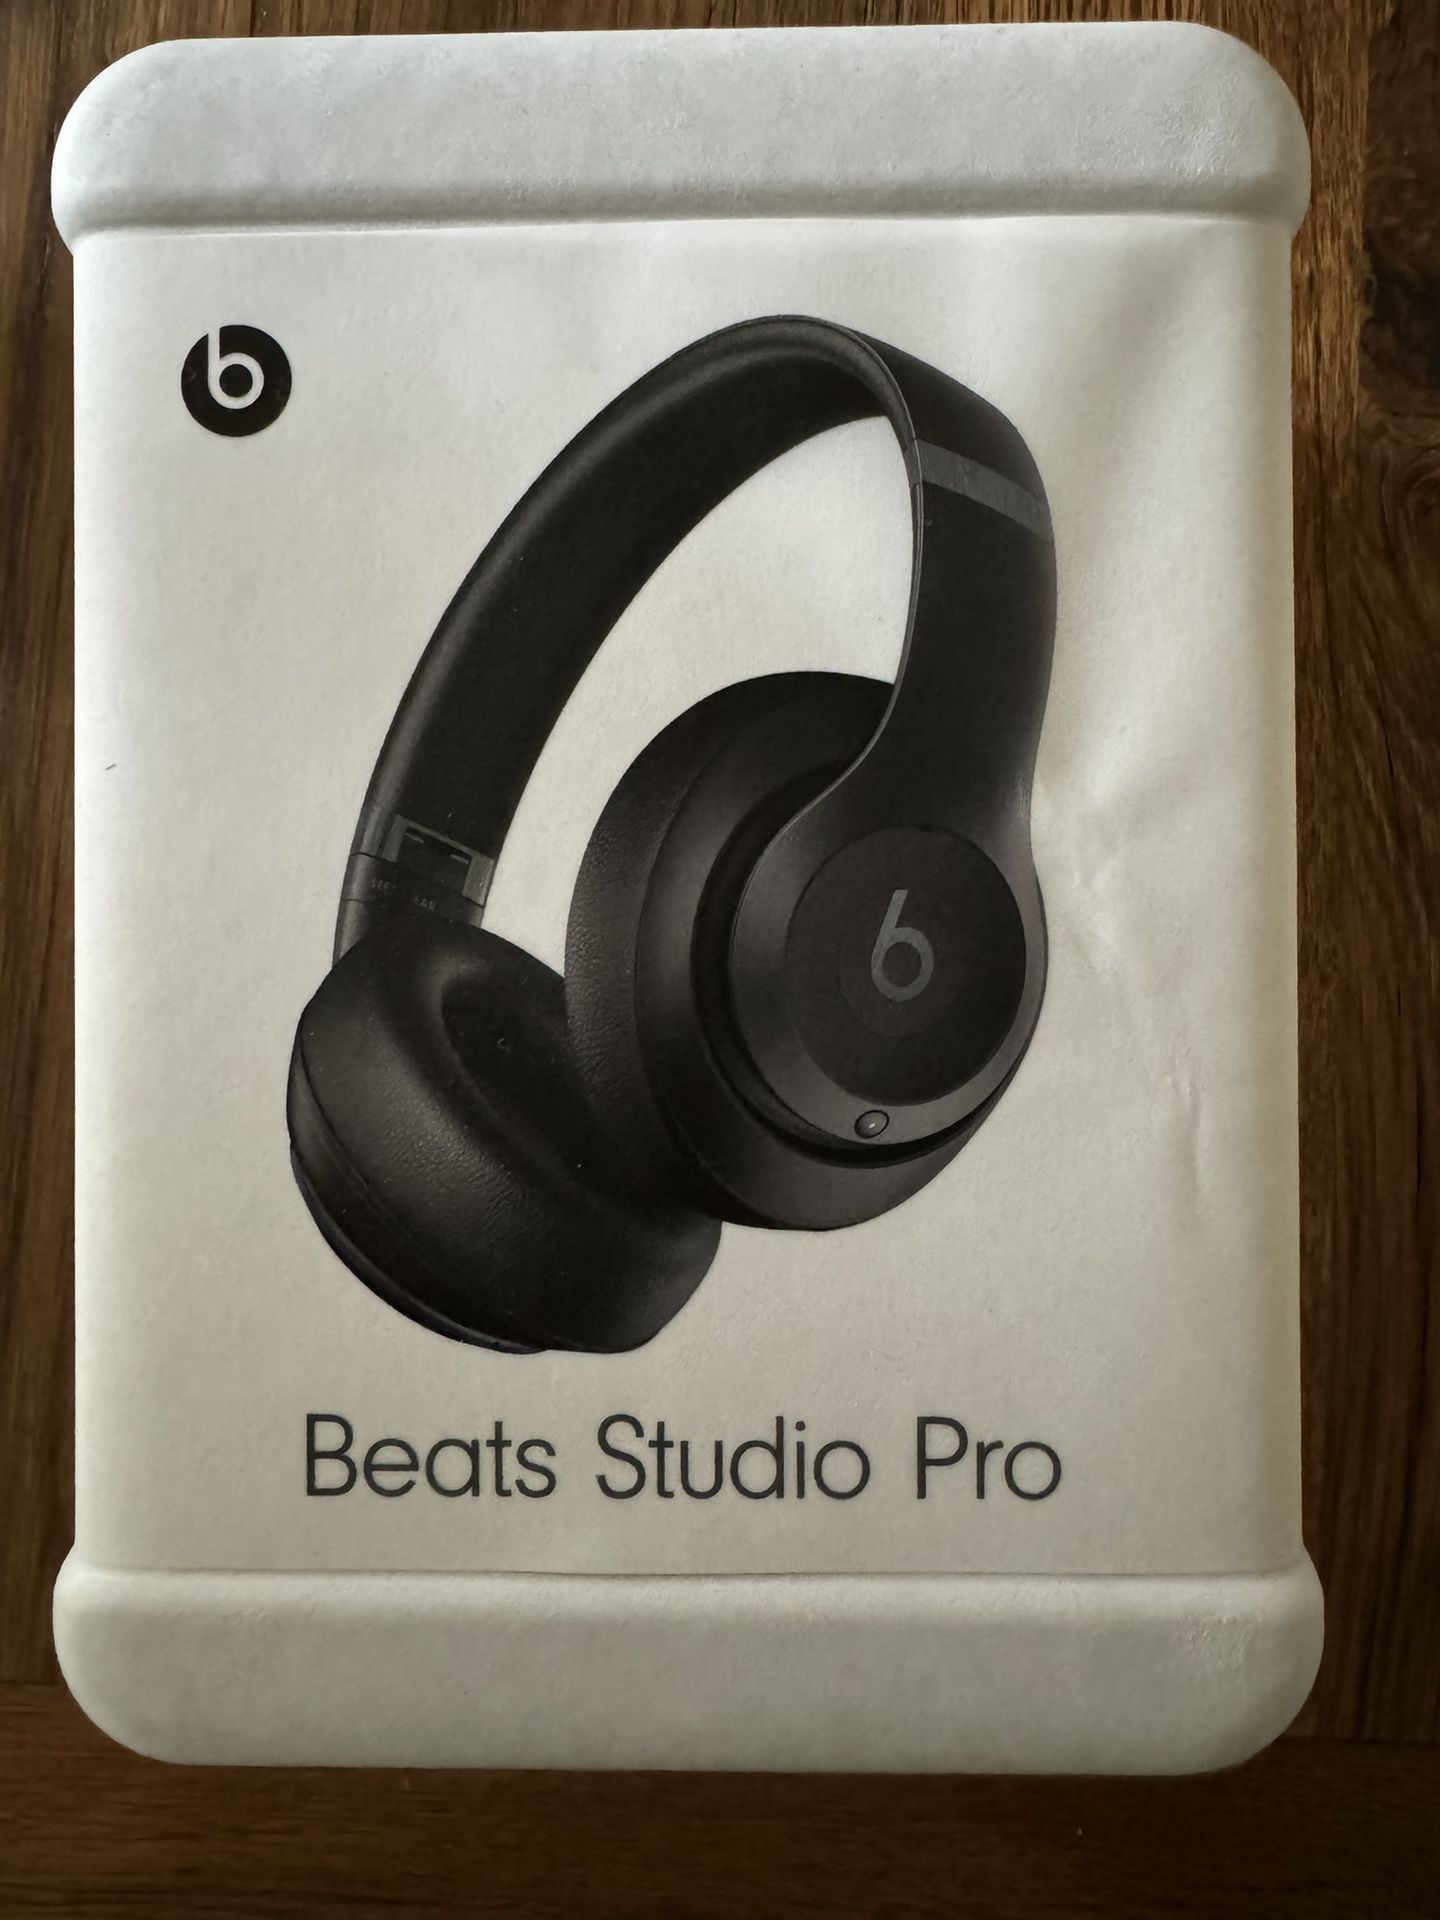 NEW Beats by Dr. Dre Studio Pro Wireless Bluetooth Headphones - Black MQTP3LL/A